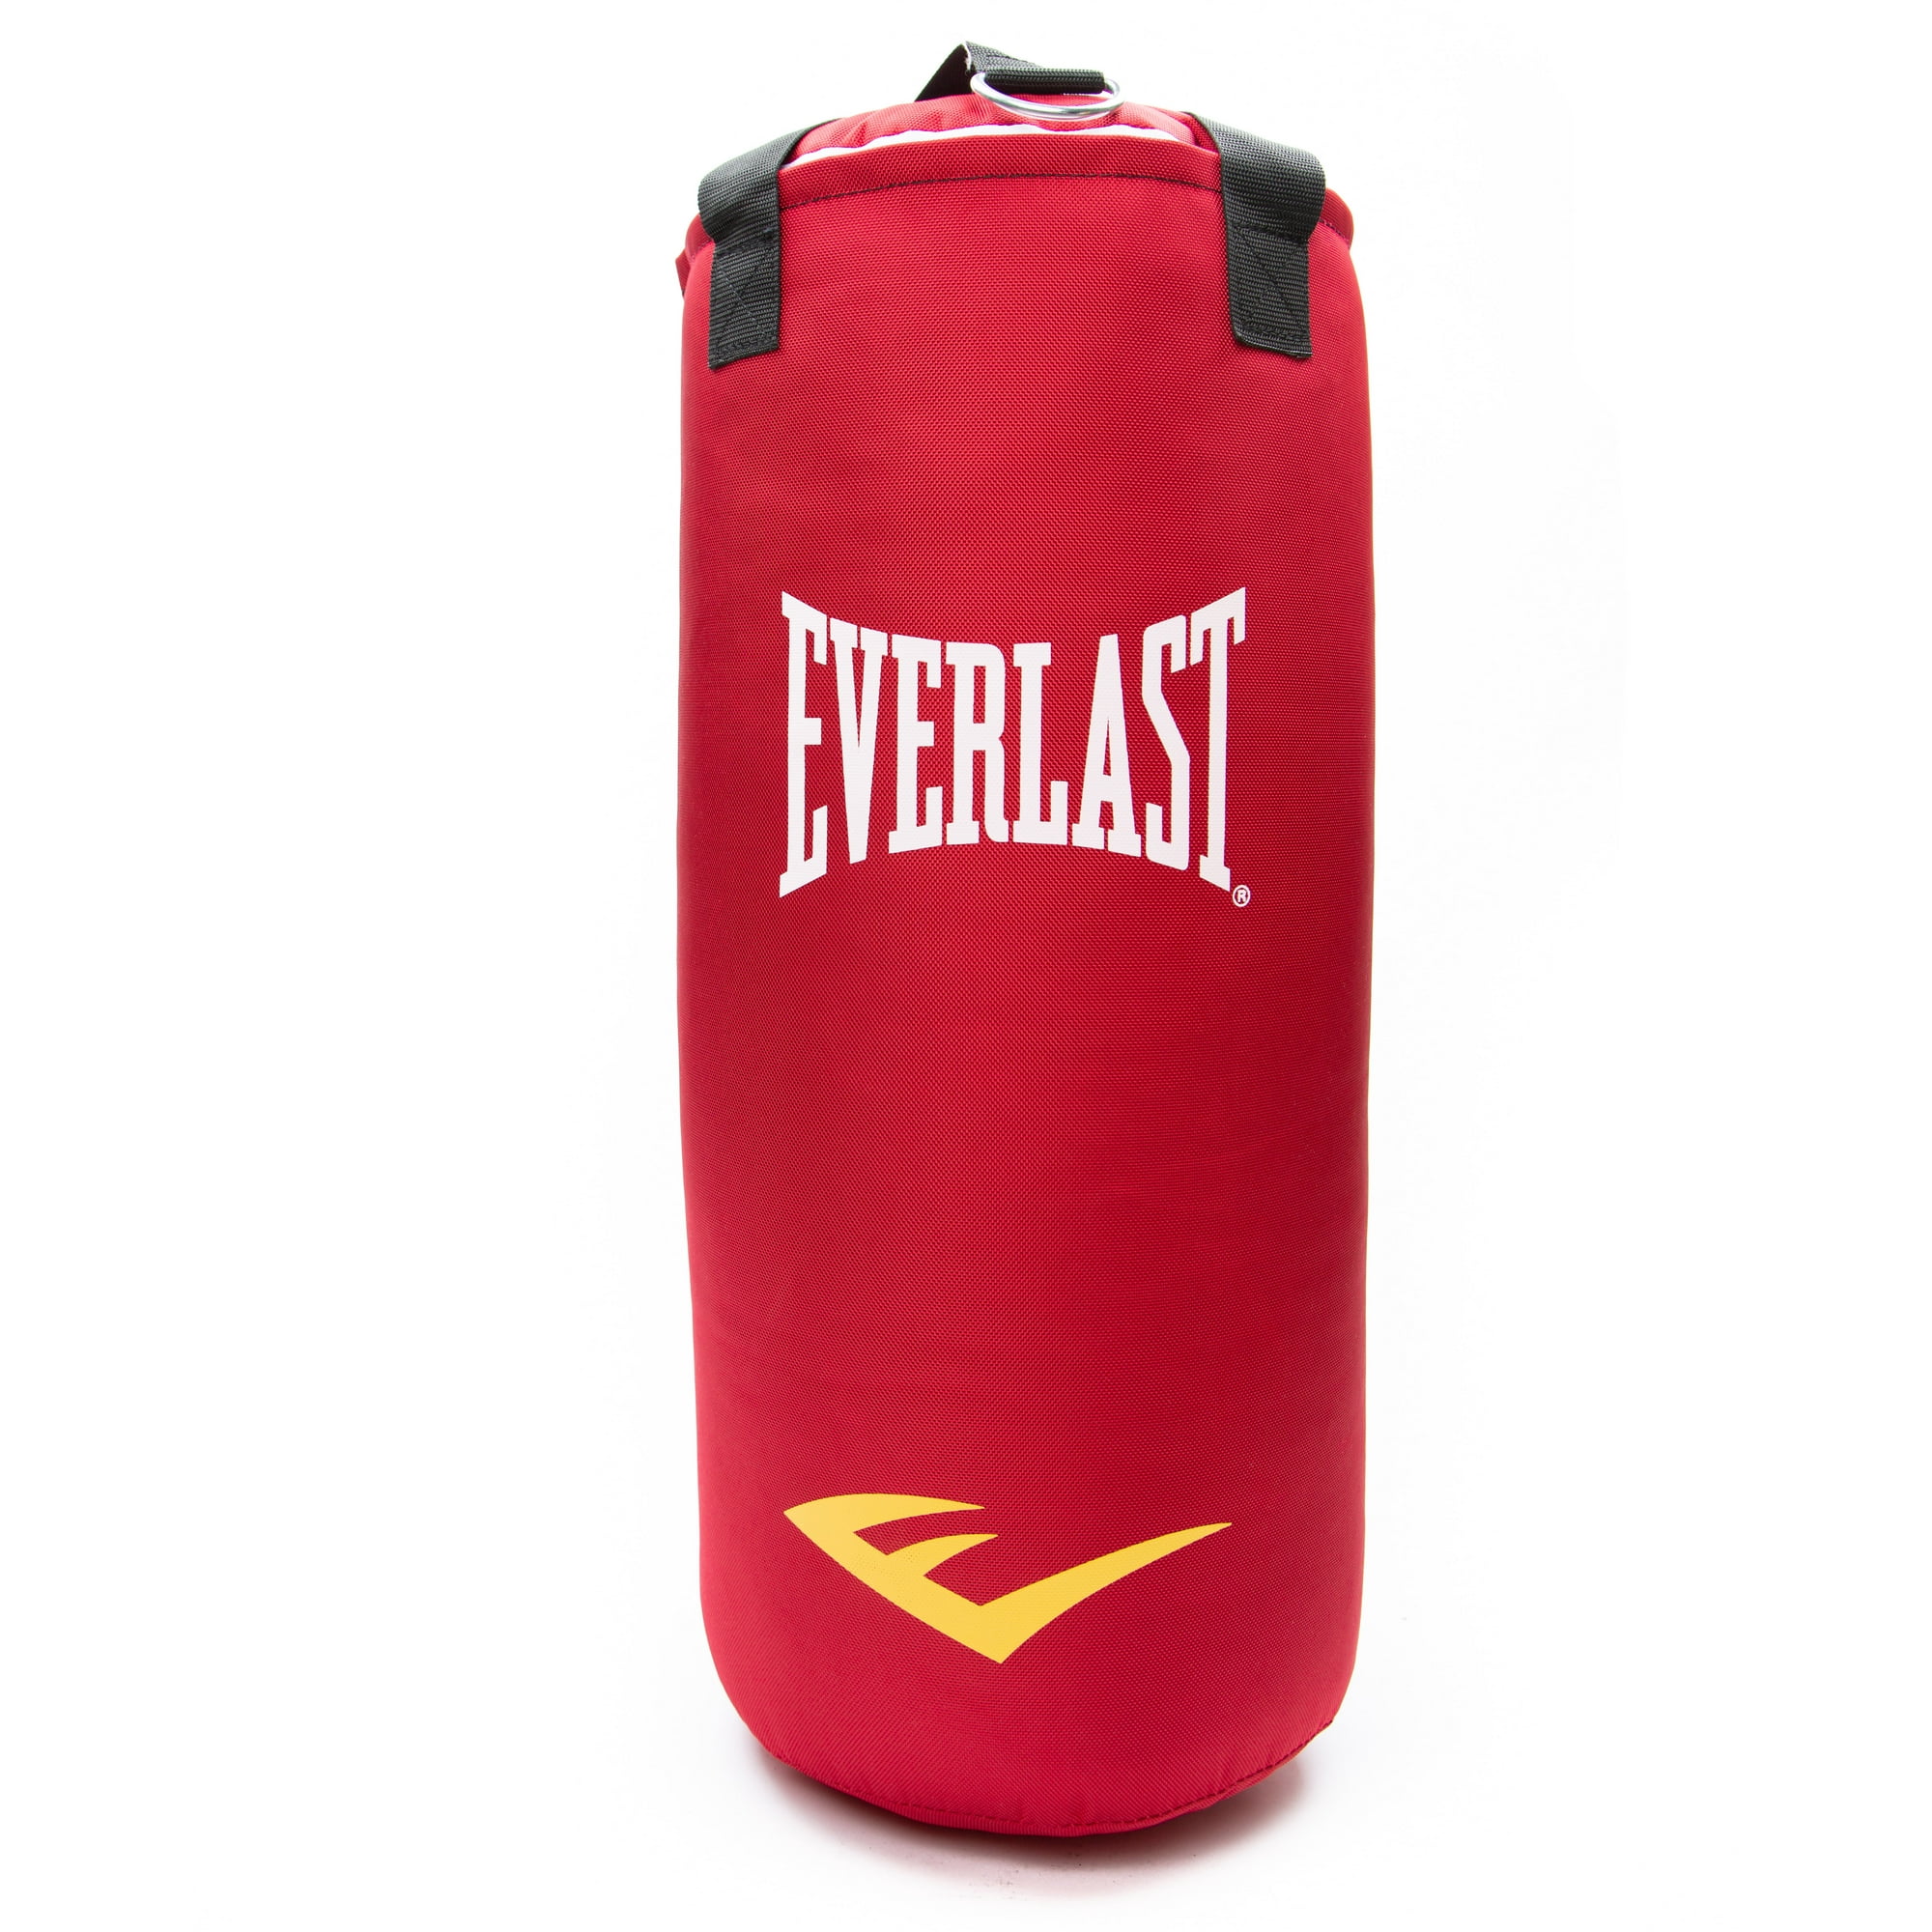 40-lb Everlast Heavy Punching Bag Kit $48.74 + Free Shipping